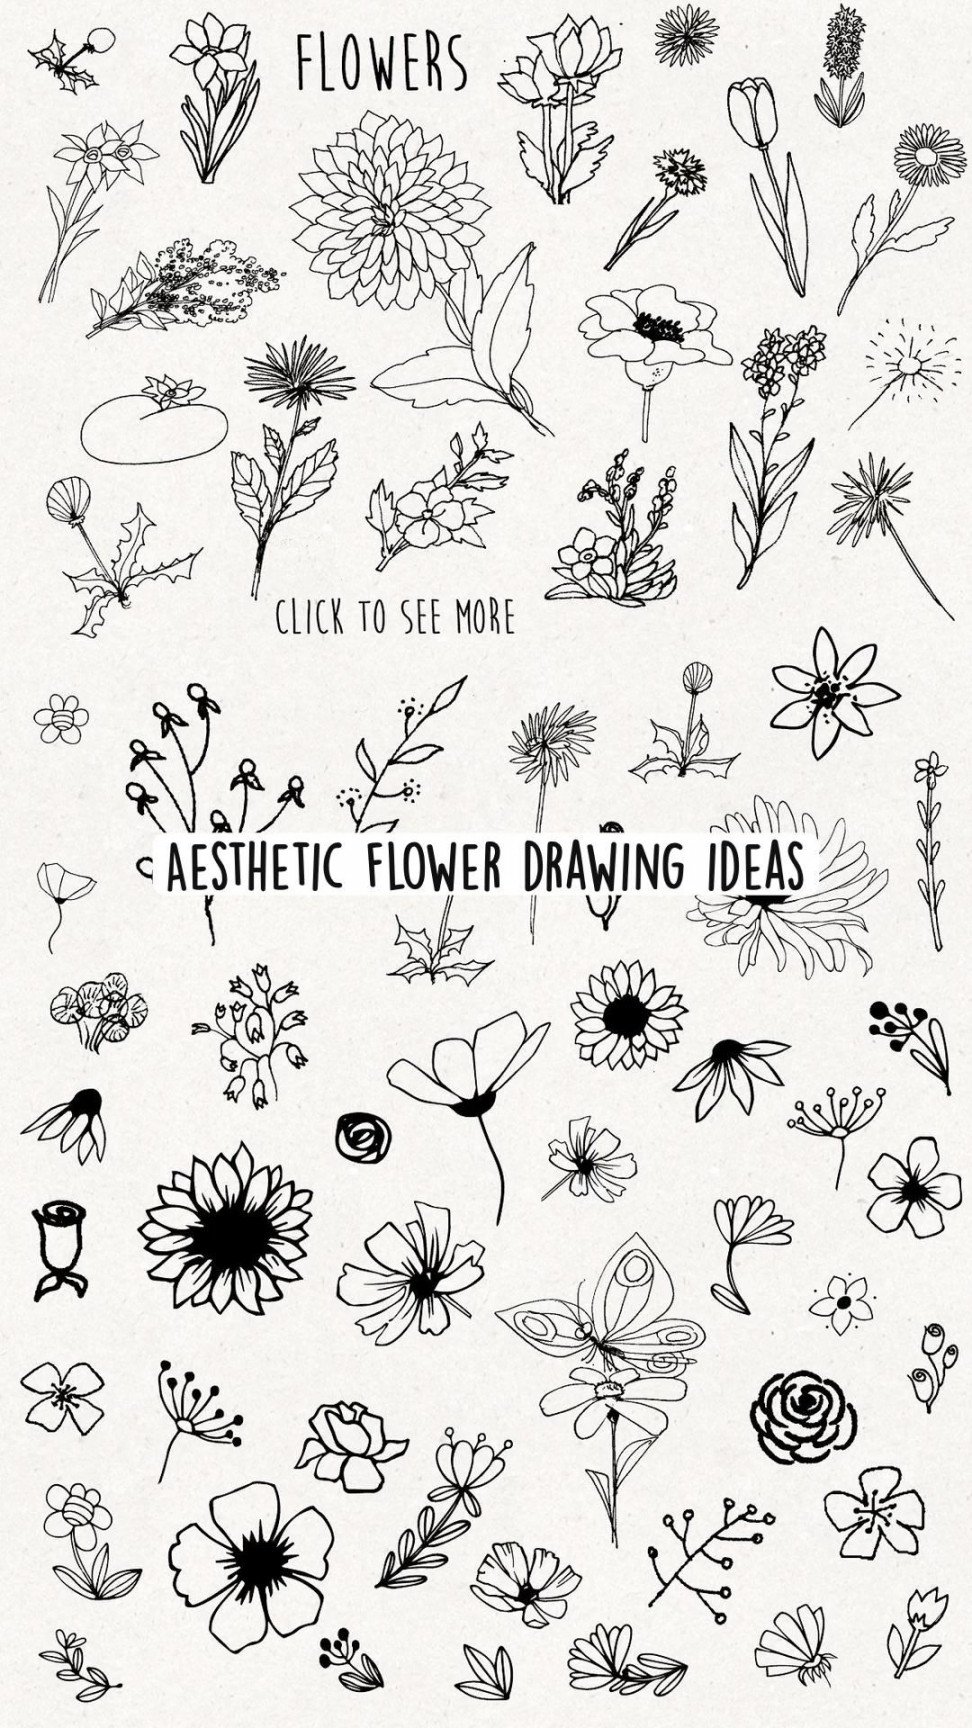 Aesthetic flower drawing ideas